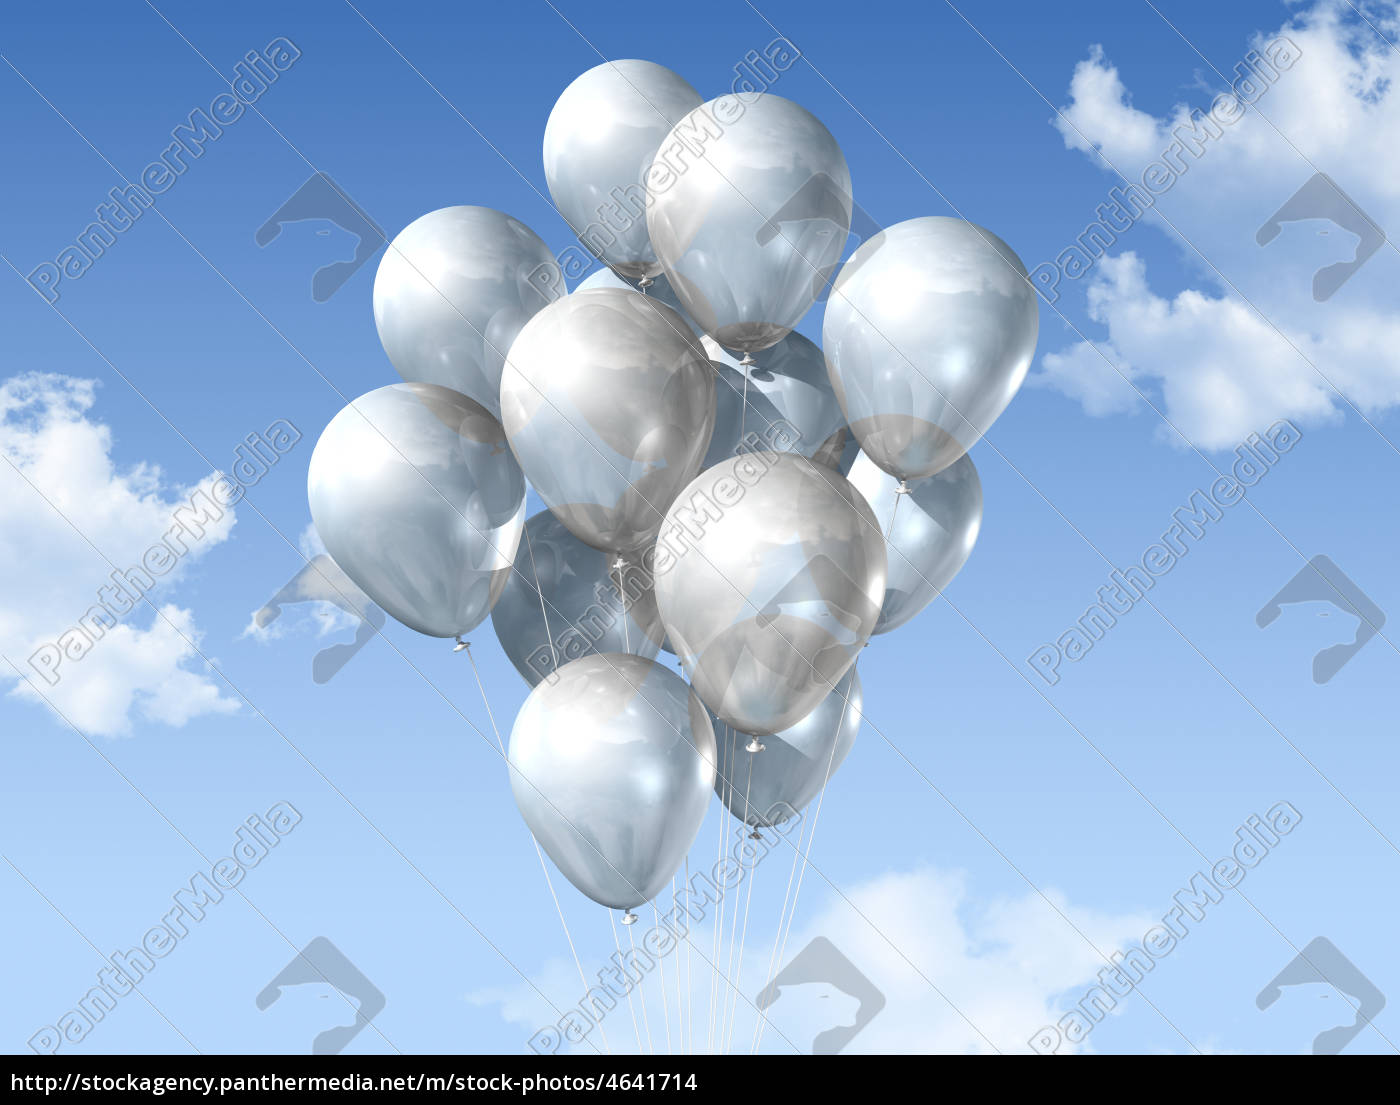 palloncini bianchi su un cielo blu - Stockphoto #4641714